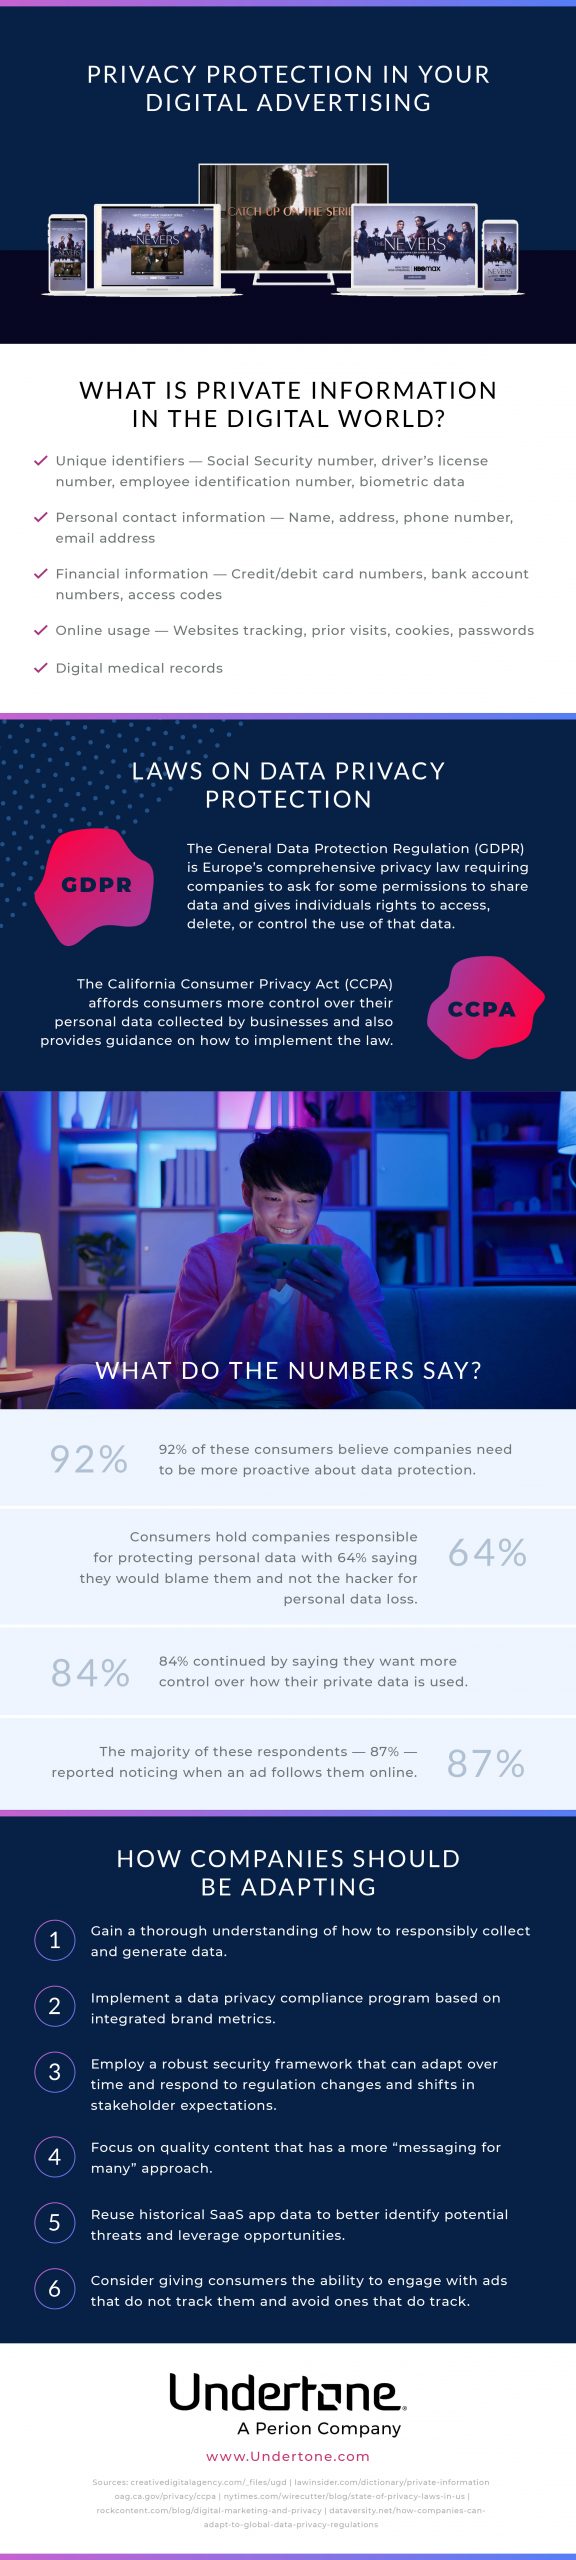 consumer data privacy infographic undertone